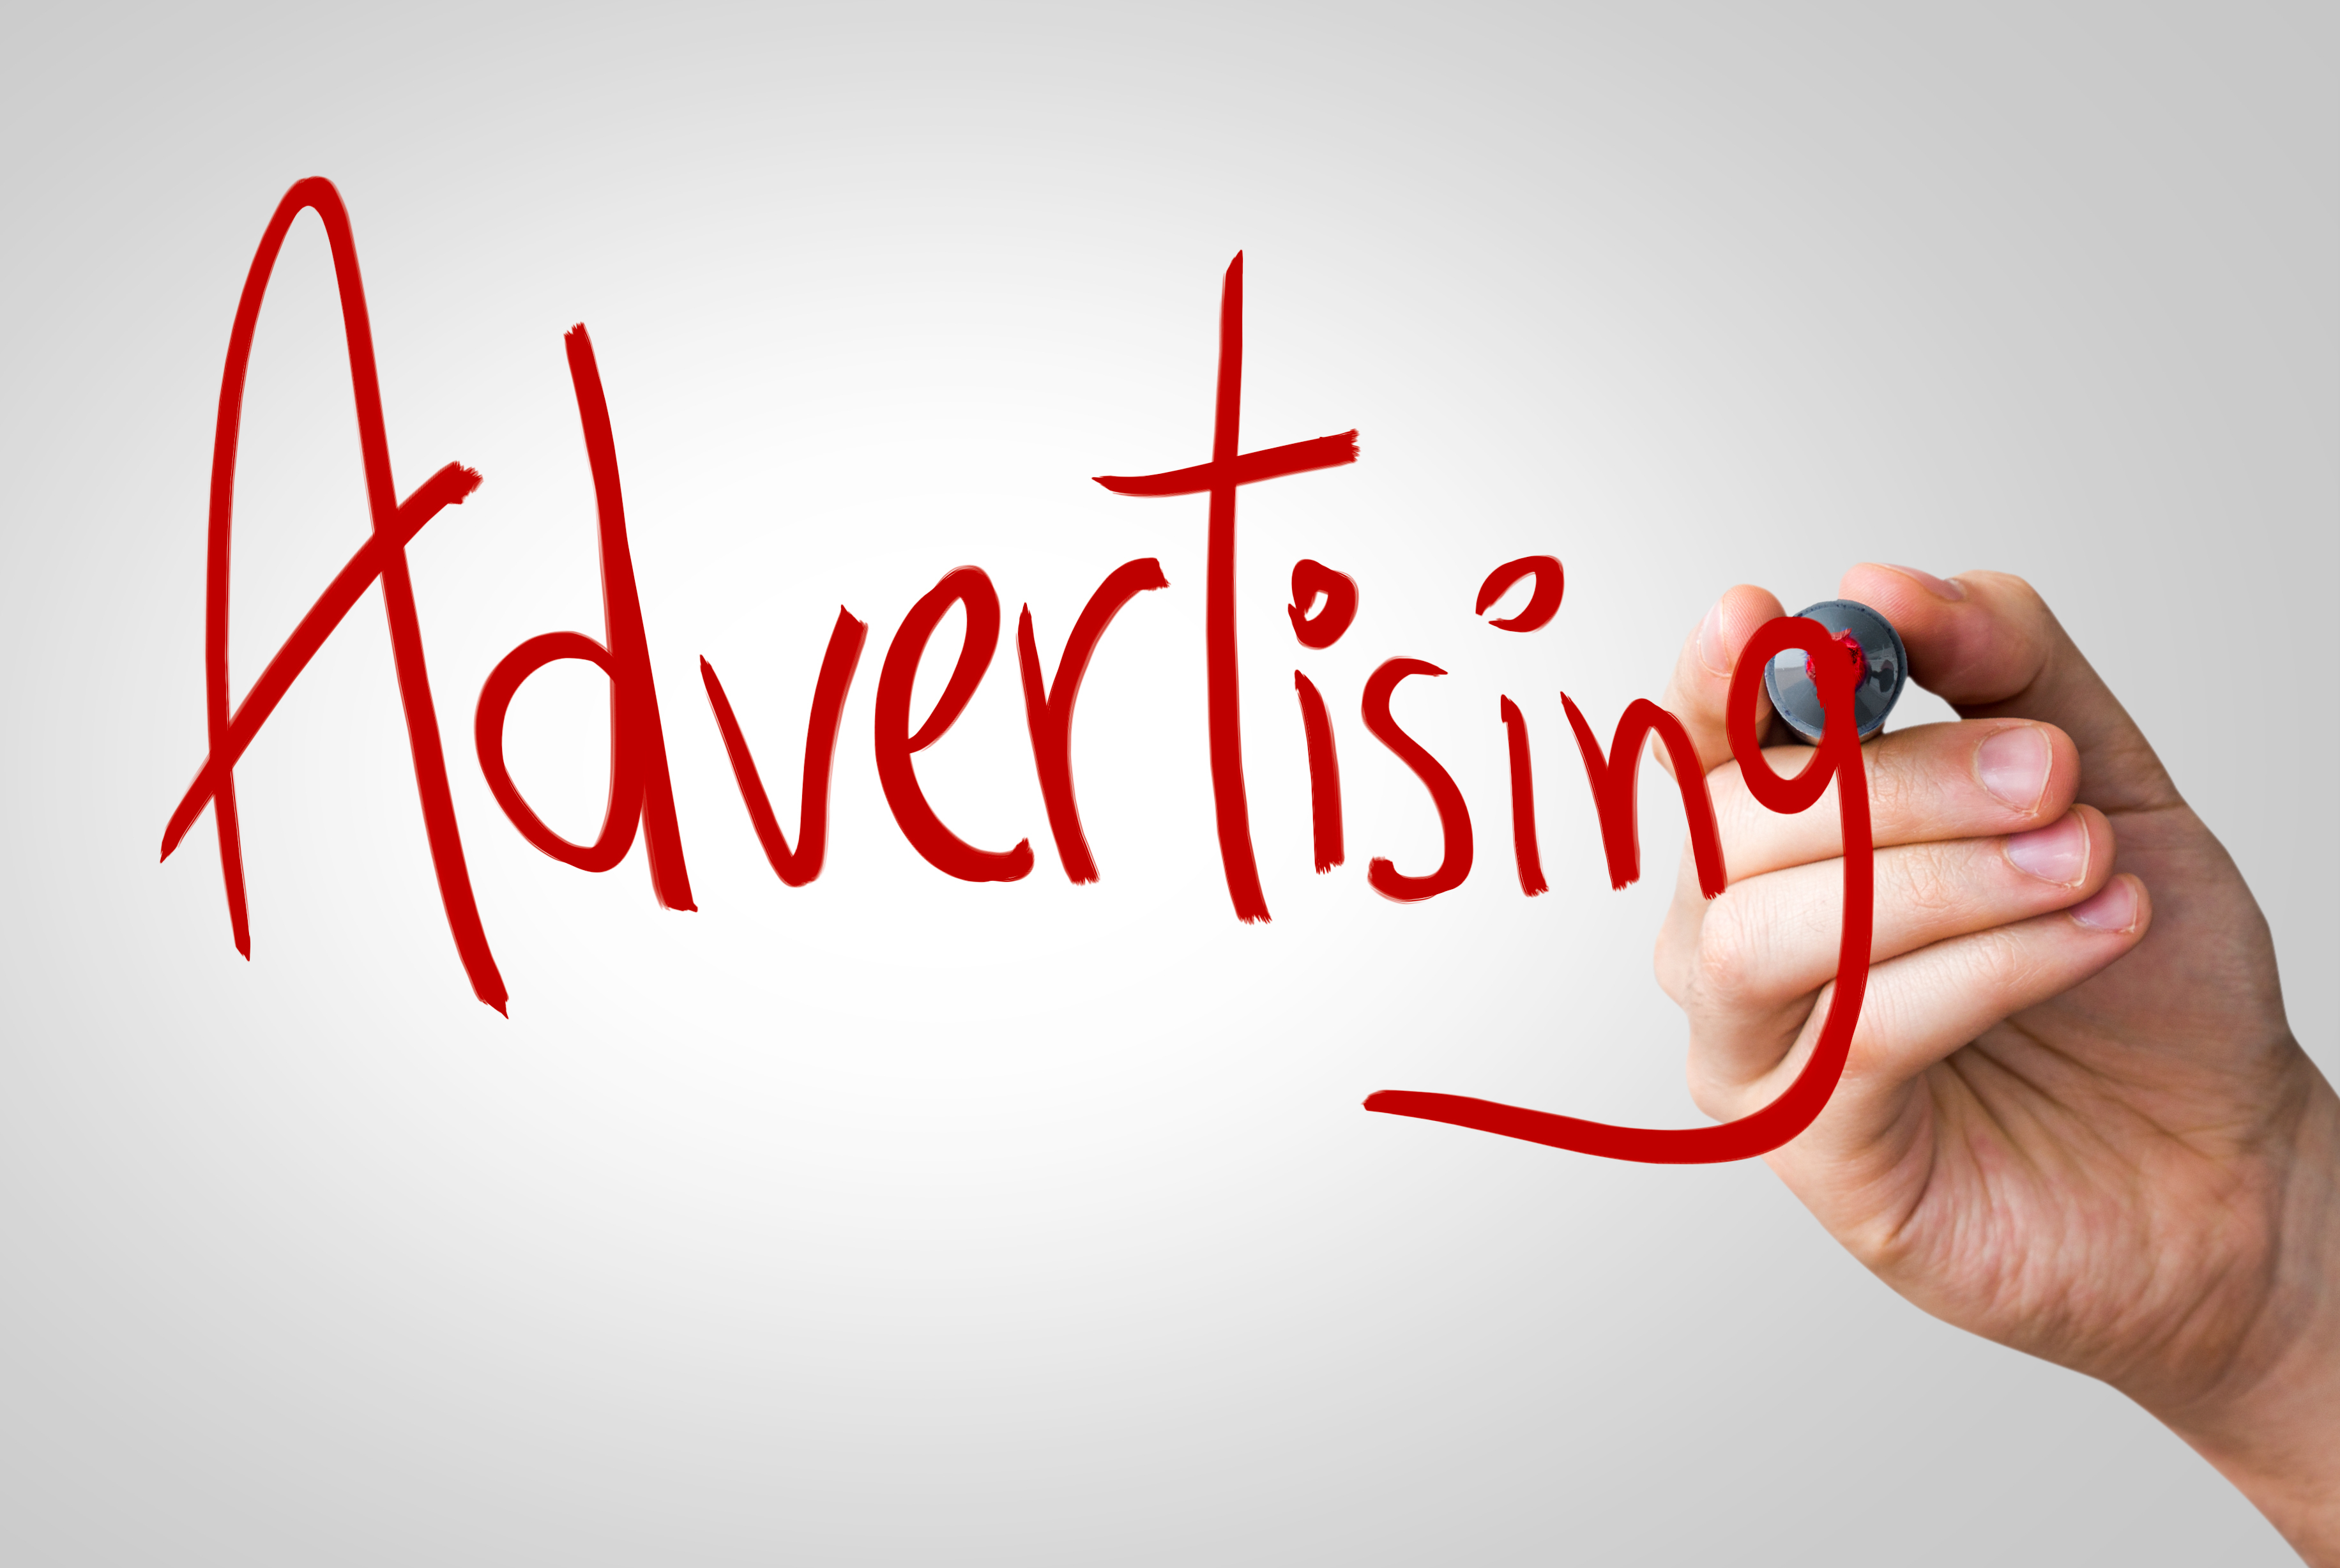 advertising agency in india